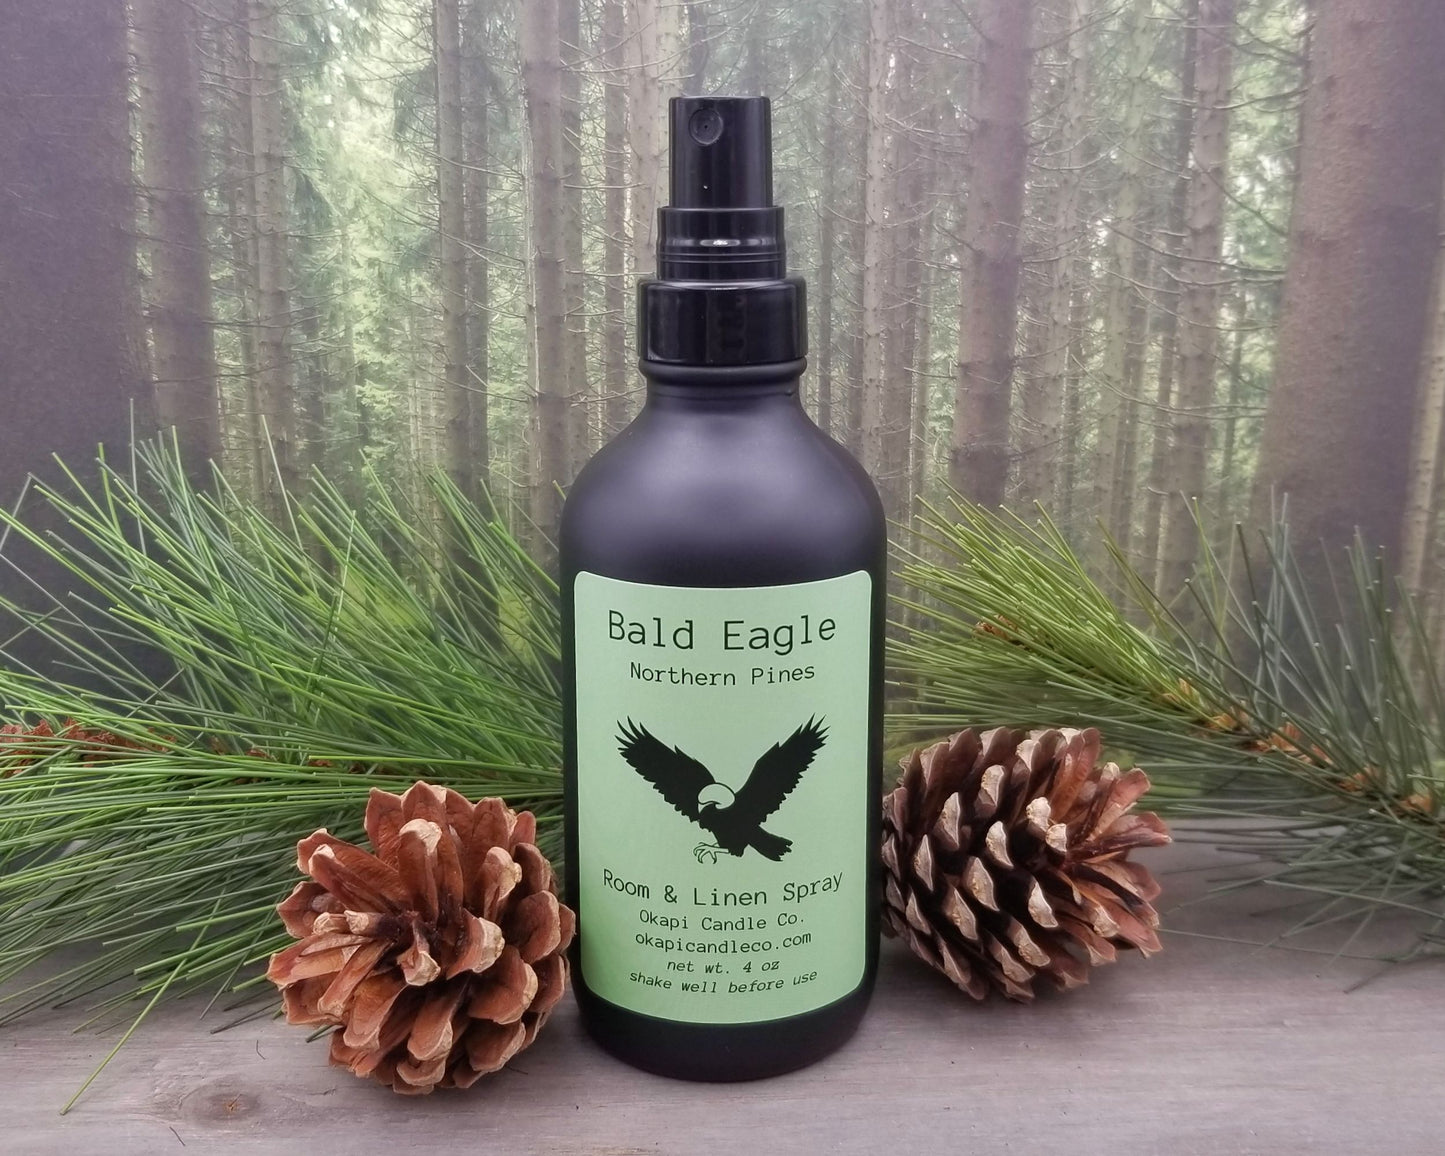 Bald Eagle Room & Linen Spray - Northern Pines Fragrance